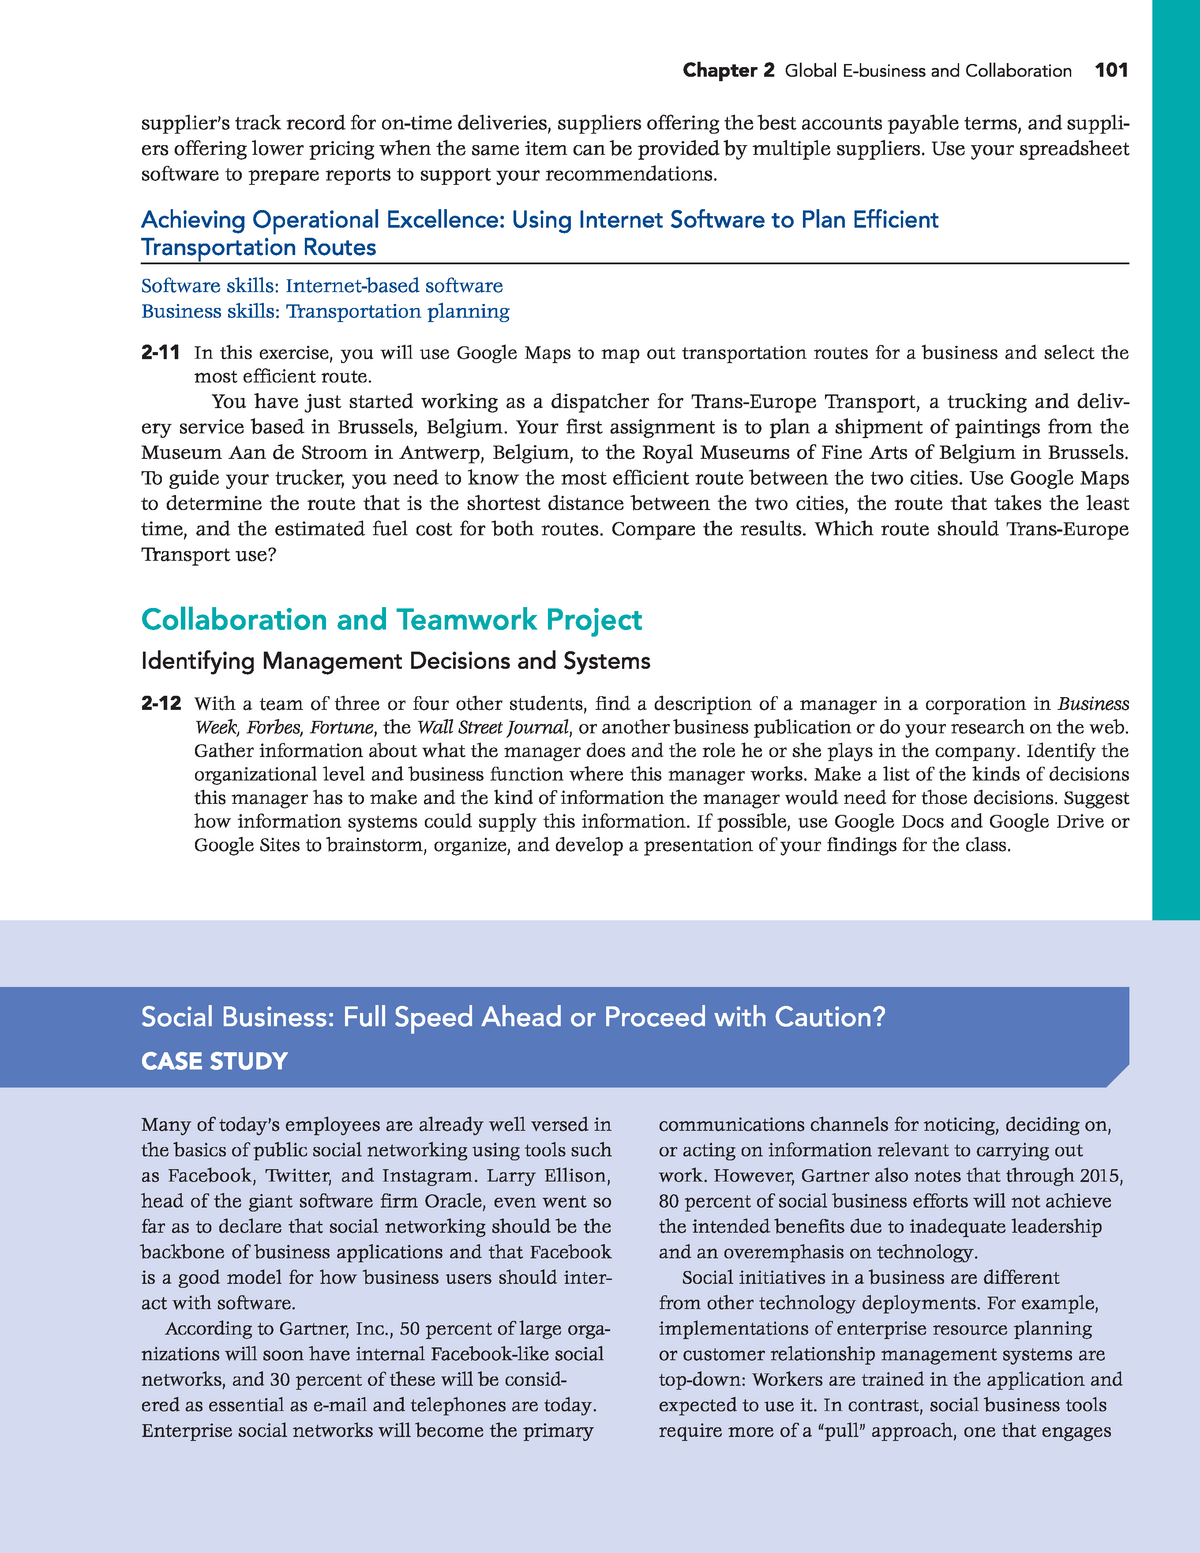 management information system case study pdf